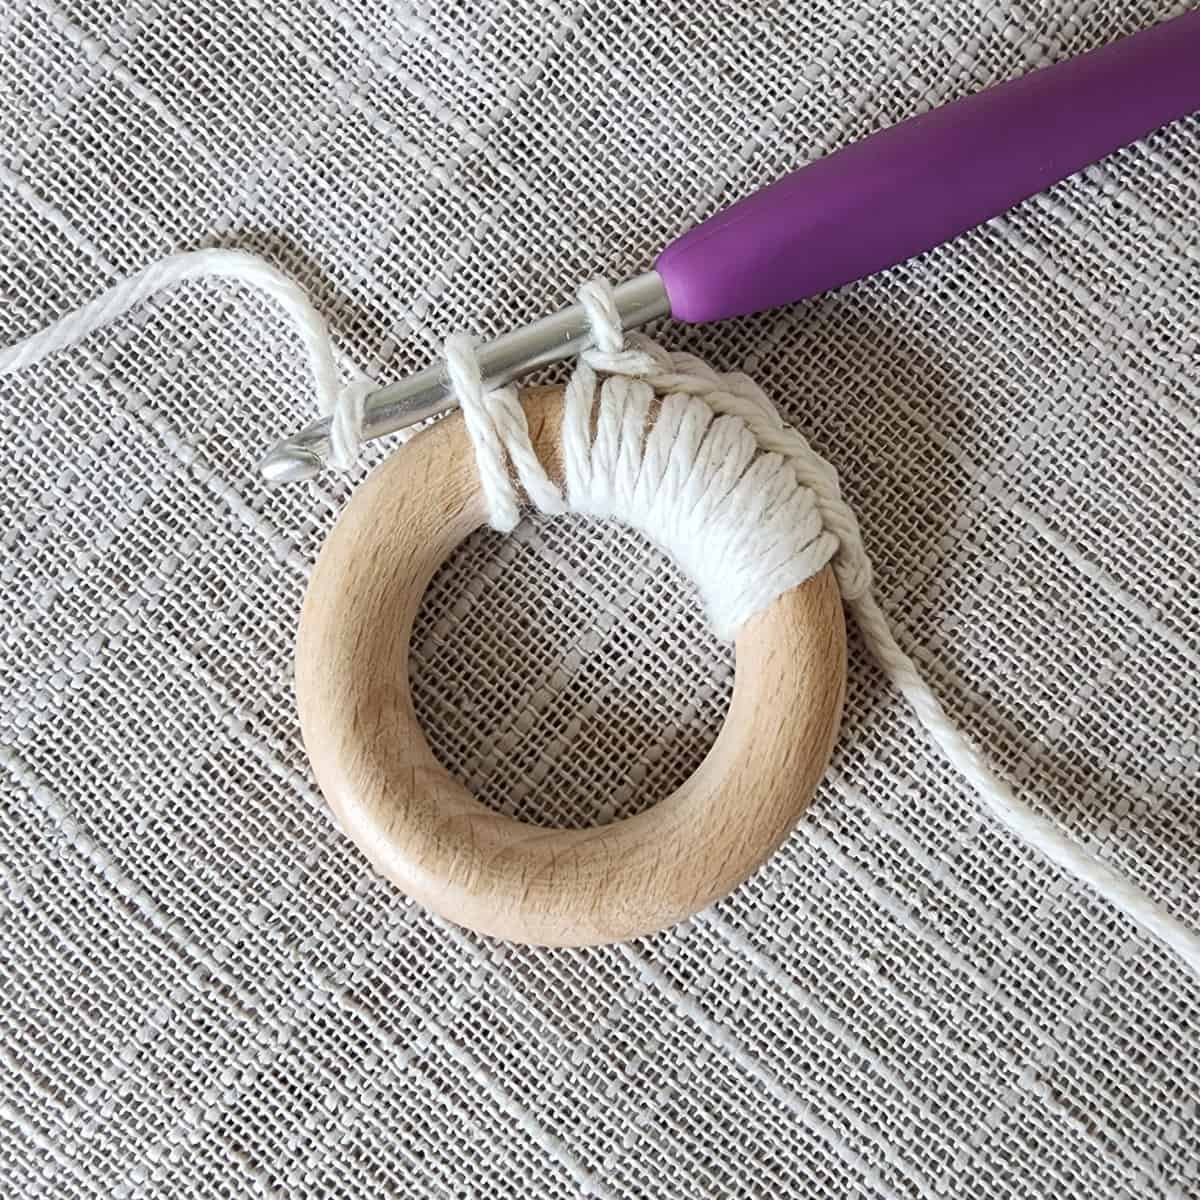 Single crochet around wood ring to create plant hanger.